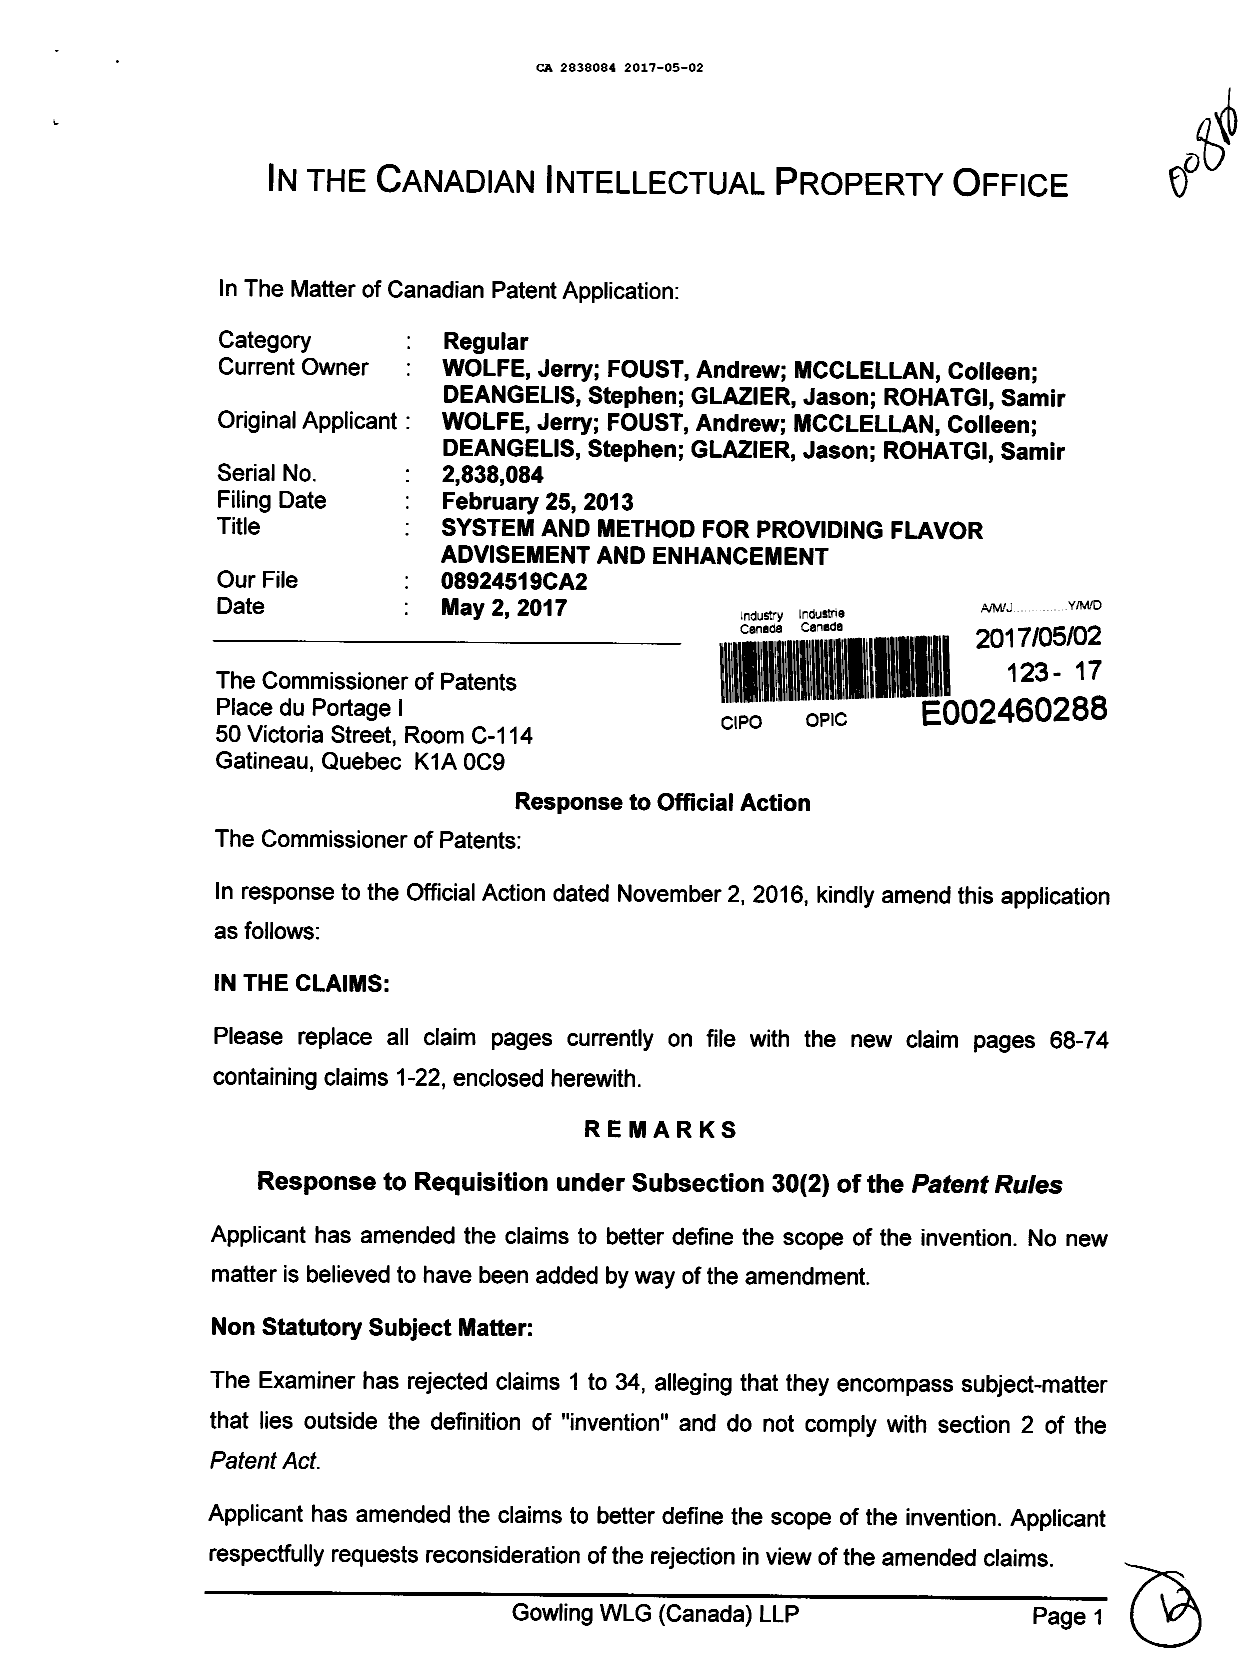 Canadian Patent Document 2838084. Amendment 20170502. Image 1 of 12